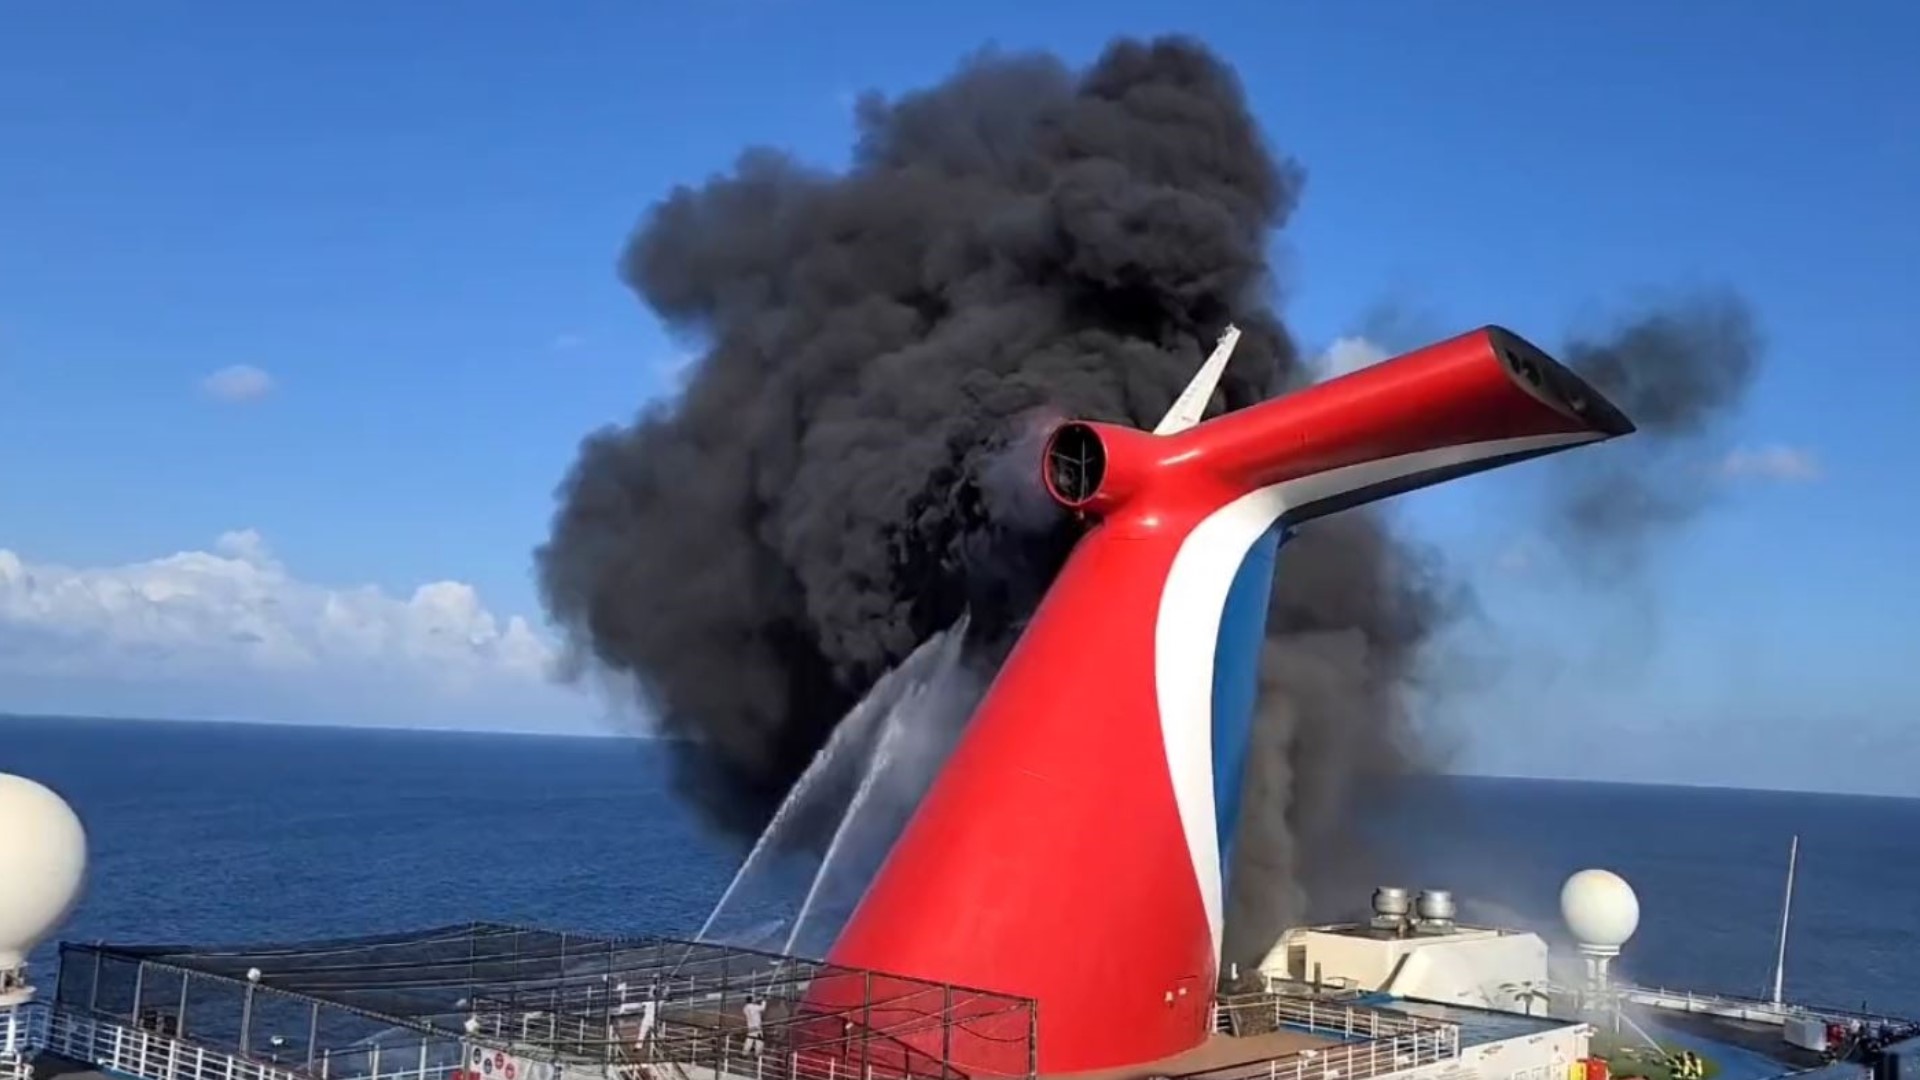 cruise ship has fire